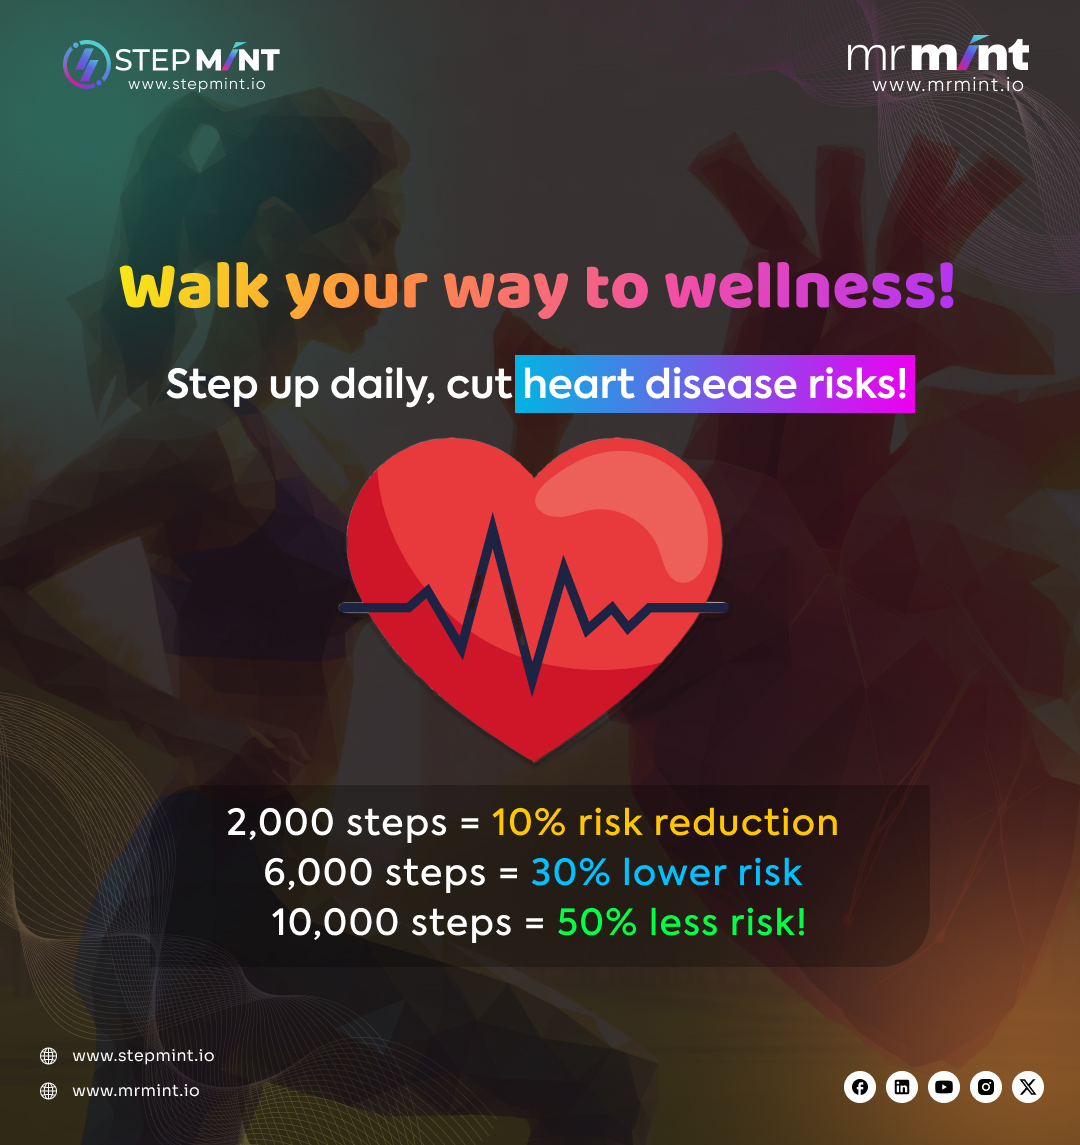 Every Step You Take is a Leap Towards Wellness! 

Download StepMint now ➡ linkmix.co/22014039 

#StepMint #MrMint #WalkandEarn #Walktoearn #HealthandWealth #HeartHealth #MoveToEarn #Walkingforhealth